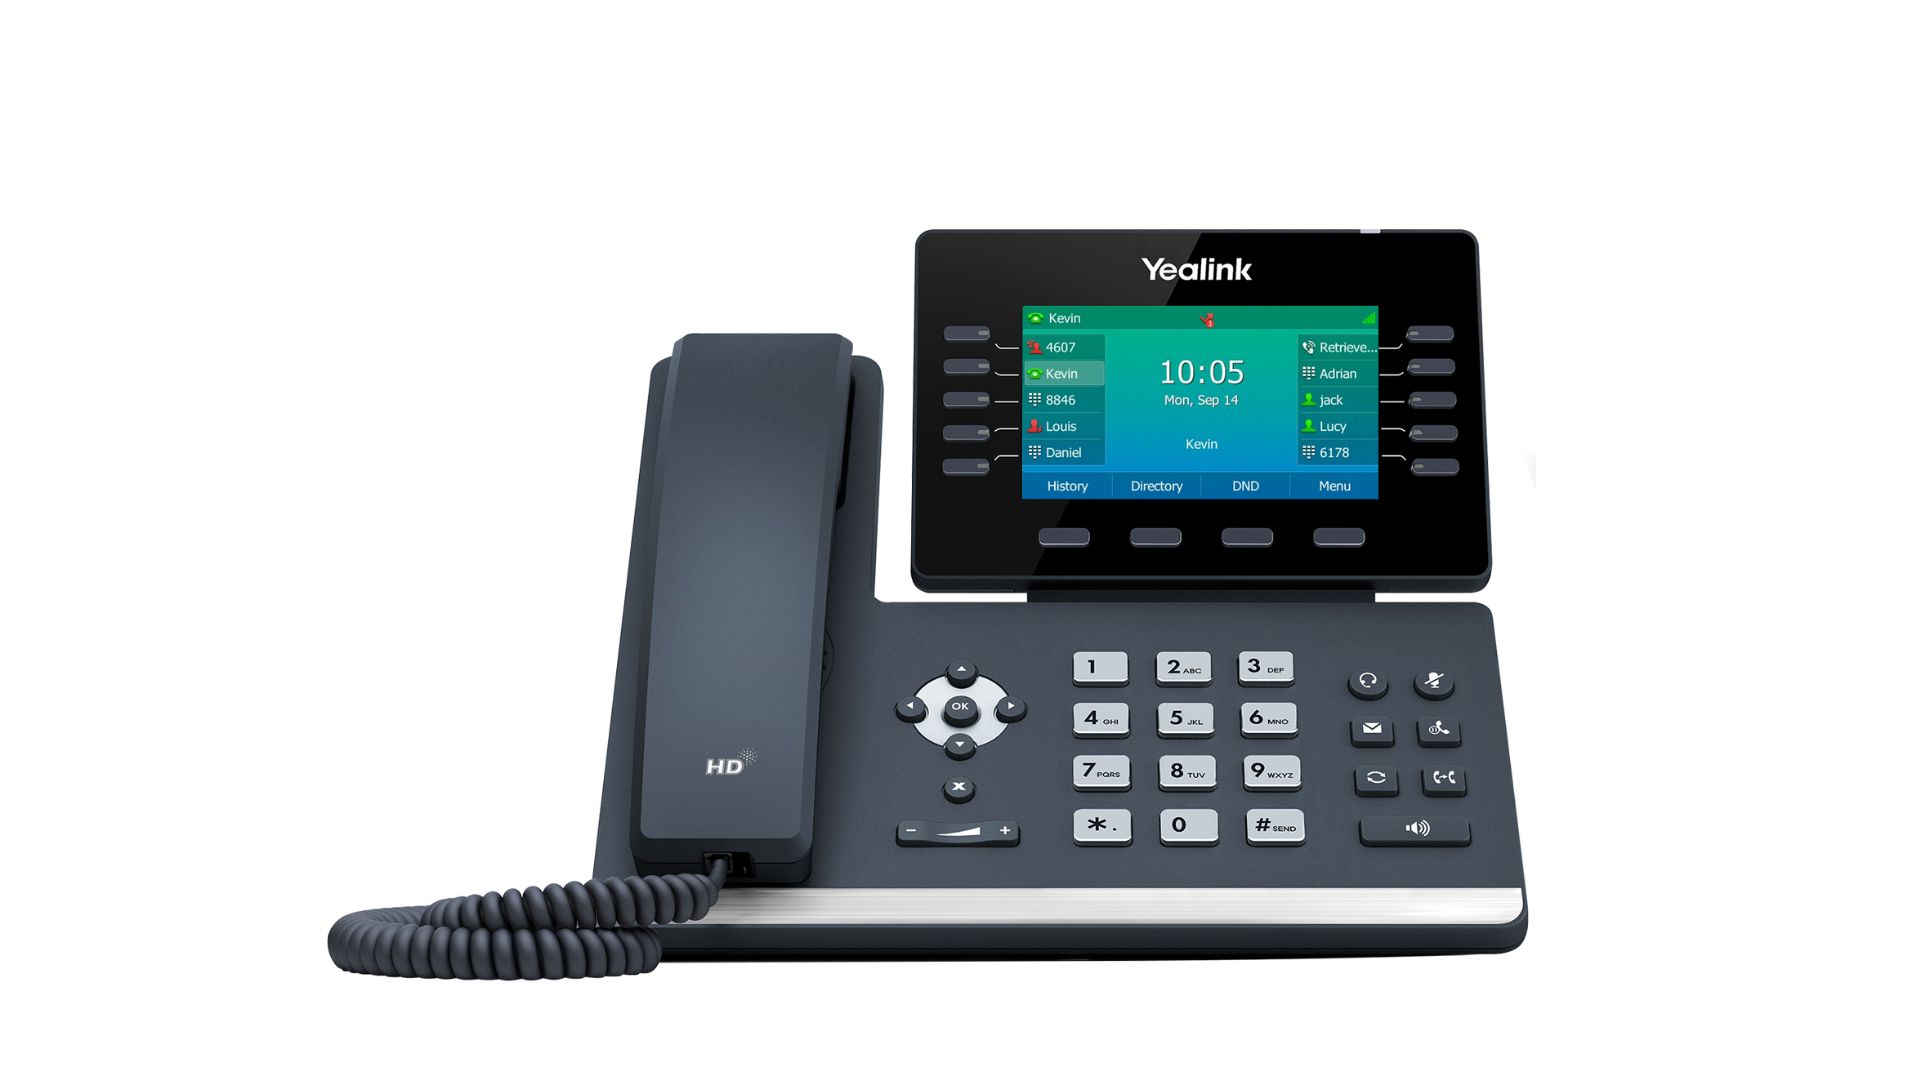 Image of Kloud 7's desk phone by Yealink.